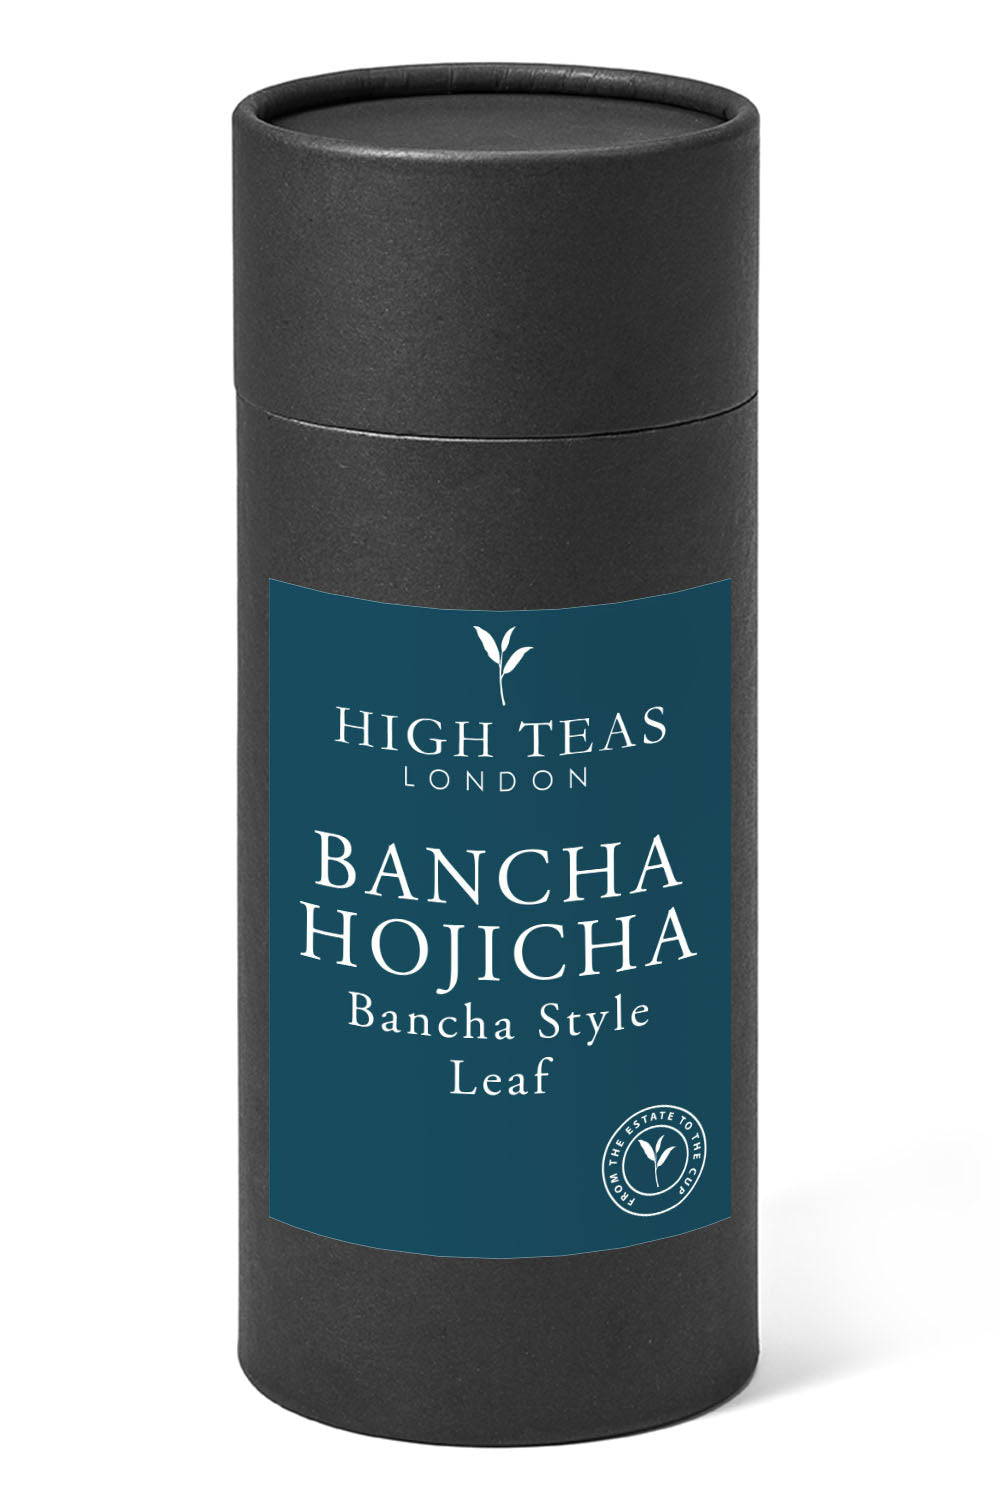 Bancha Hojicha-150g gift-Loose Leaf Tea-High Teas